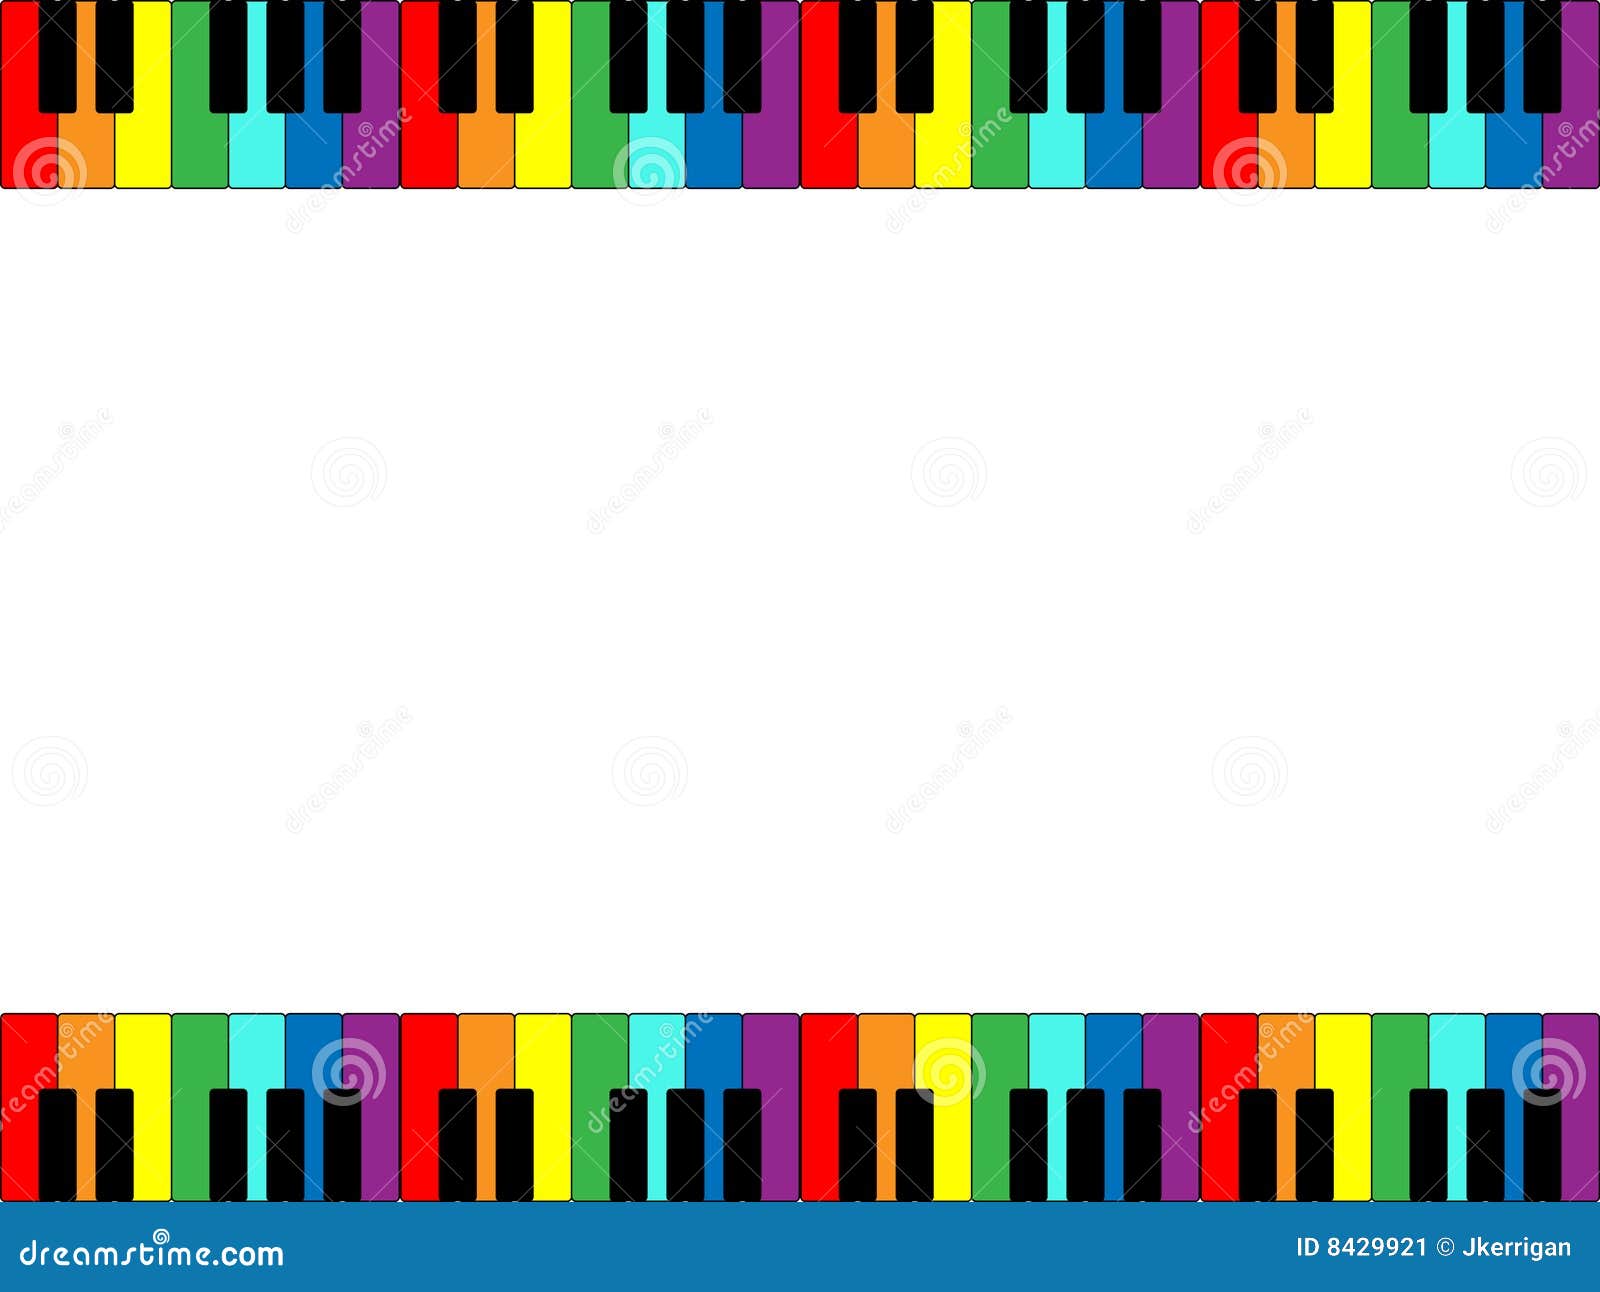 piano keyboard clip art border - photo #24